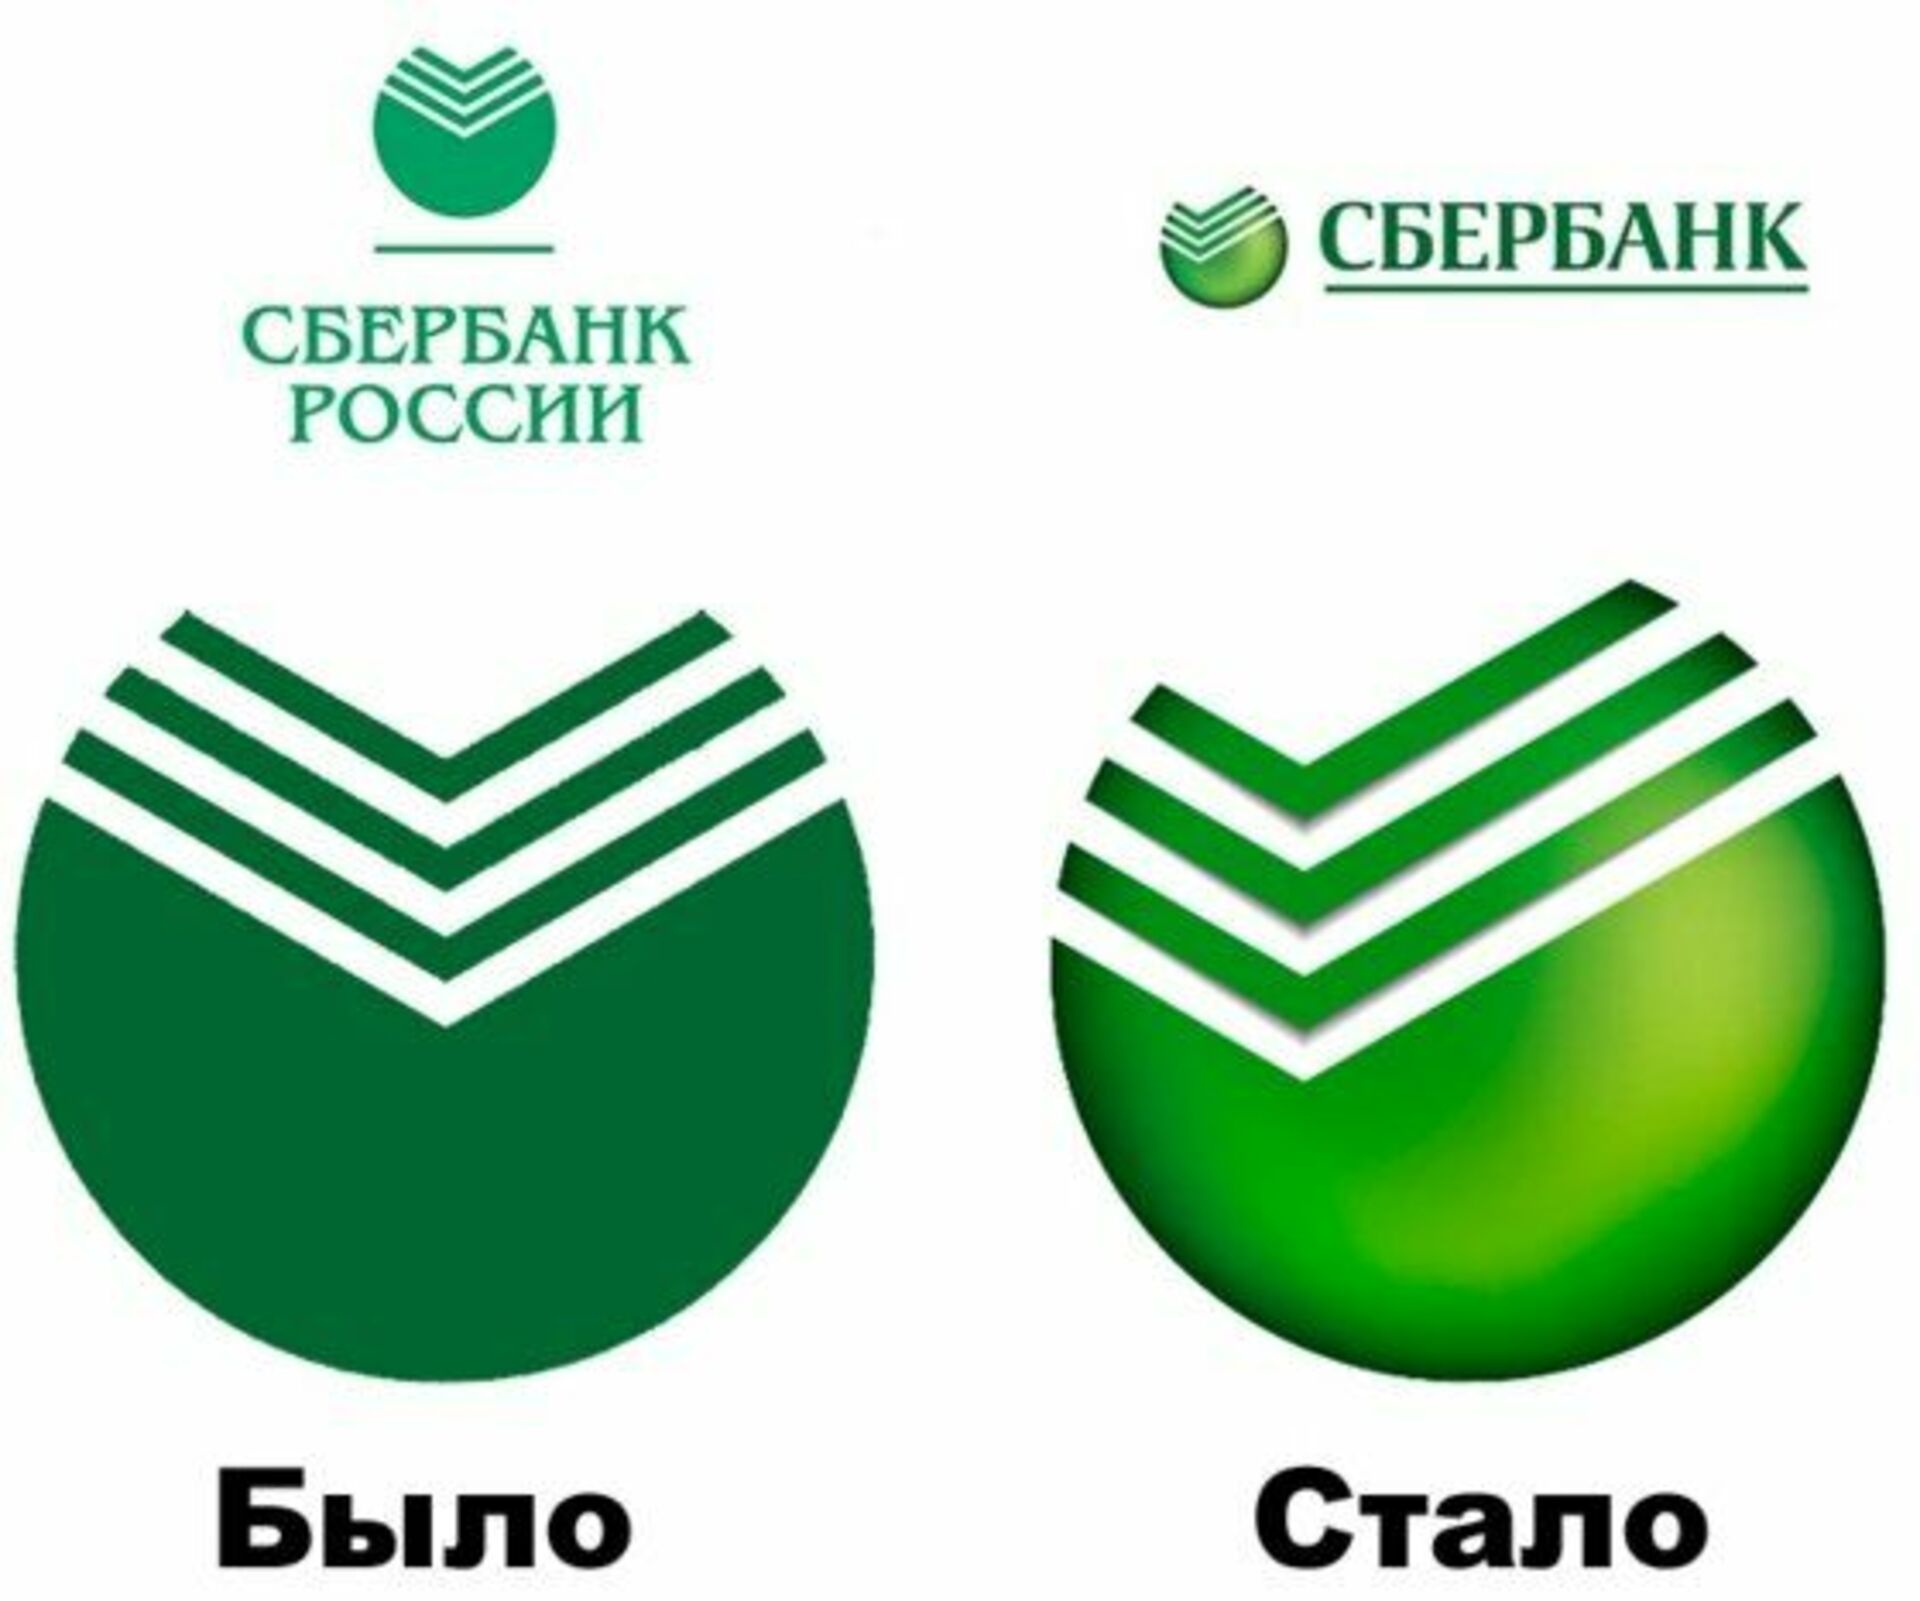 Cc wiki sberbank. Сбербанк логотип. Старый логотип Сбербанка. Логотип Сбера новый. Ребрендинг Сбербанка.